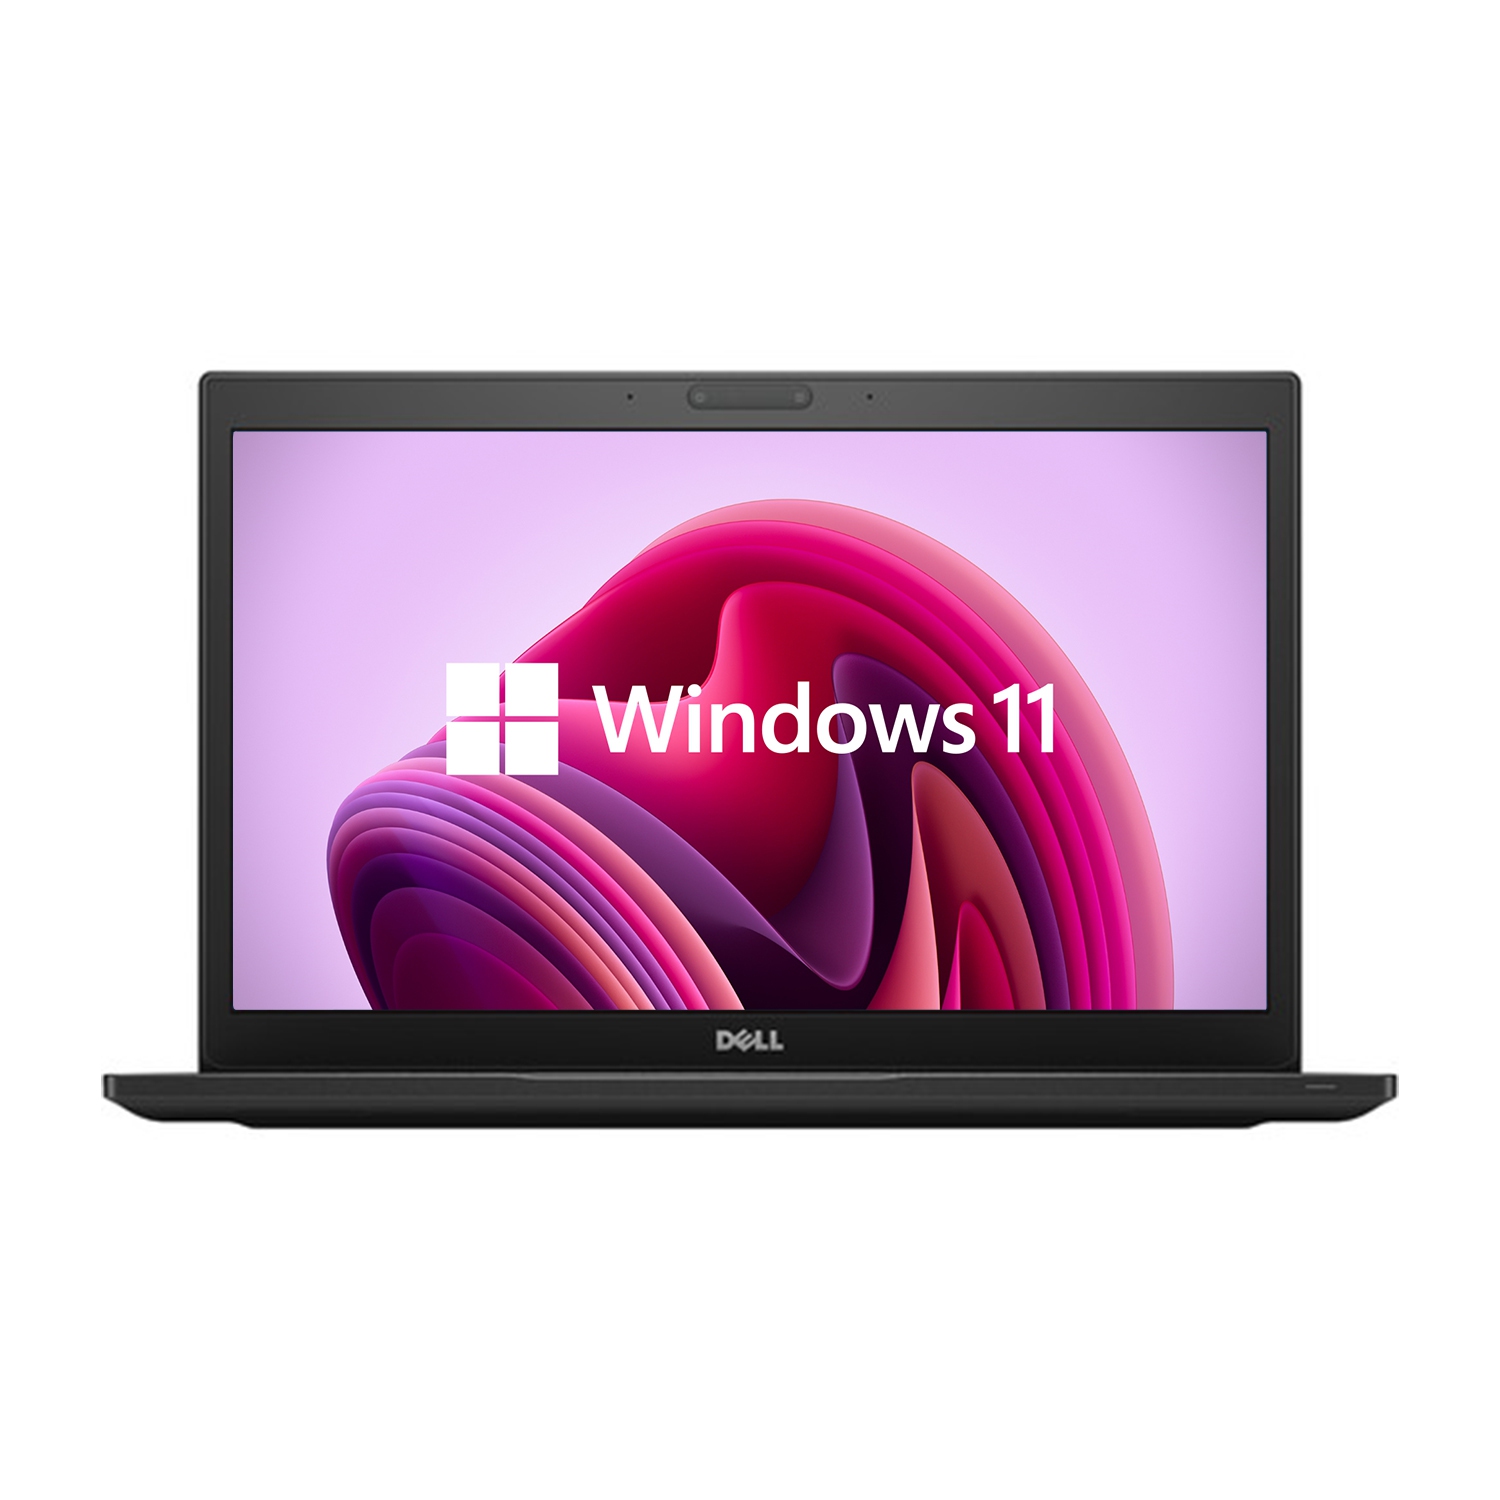 Refurbished (Excellent) - Dell Latitude 7490 Windows 11 Pro Laptop - 14 inch Screen (Intel Core i5 8th Gen/ 32GB RAM/ 512GB SSD/ Anti-Glare Display/ Backlit Keyboard/ HDMI) - Black